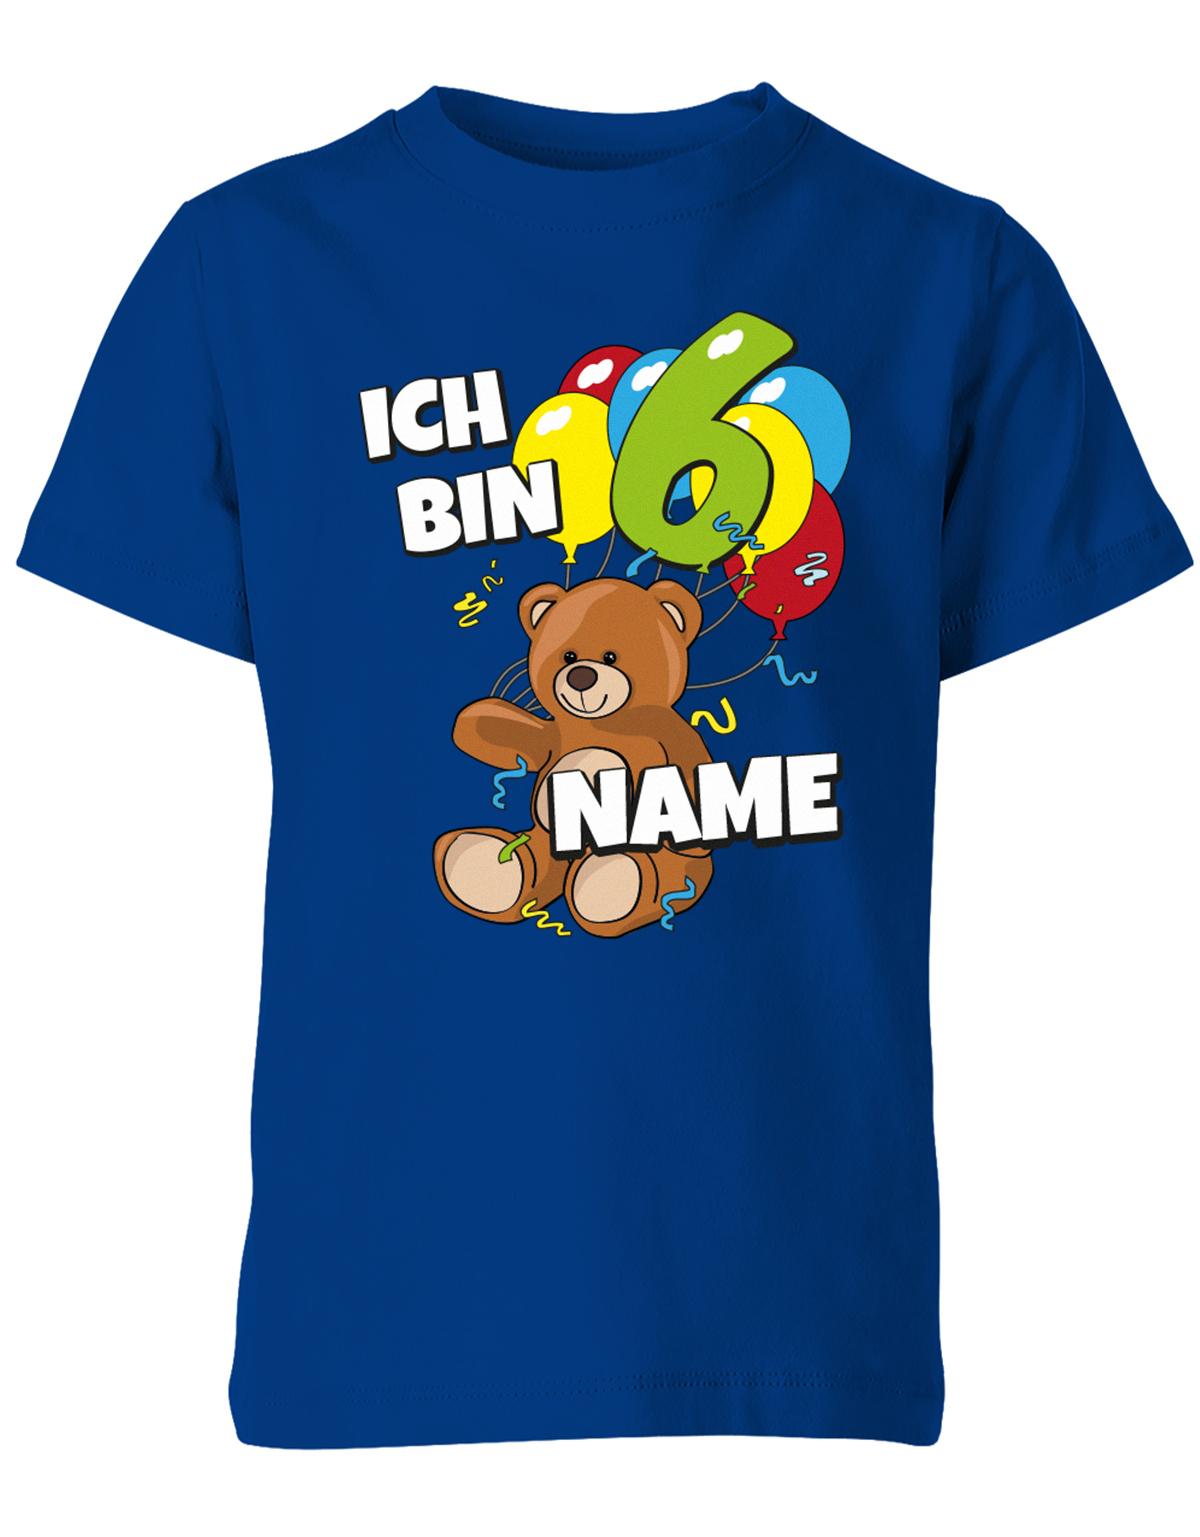 ich-bin-6-teddy-luftballons-kinder-shirt-royalblau